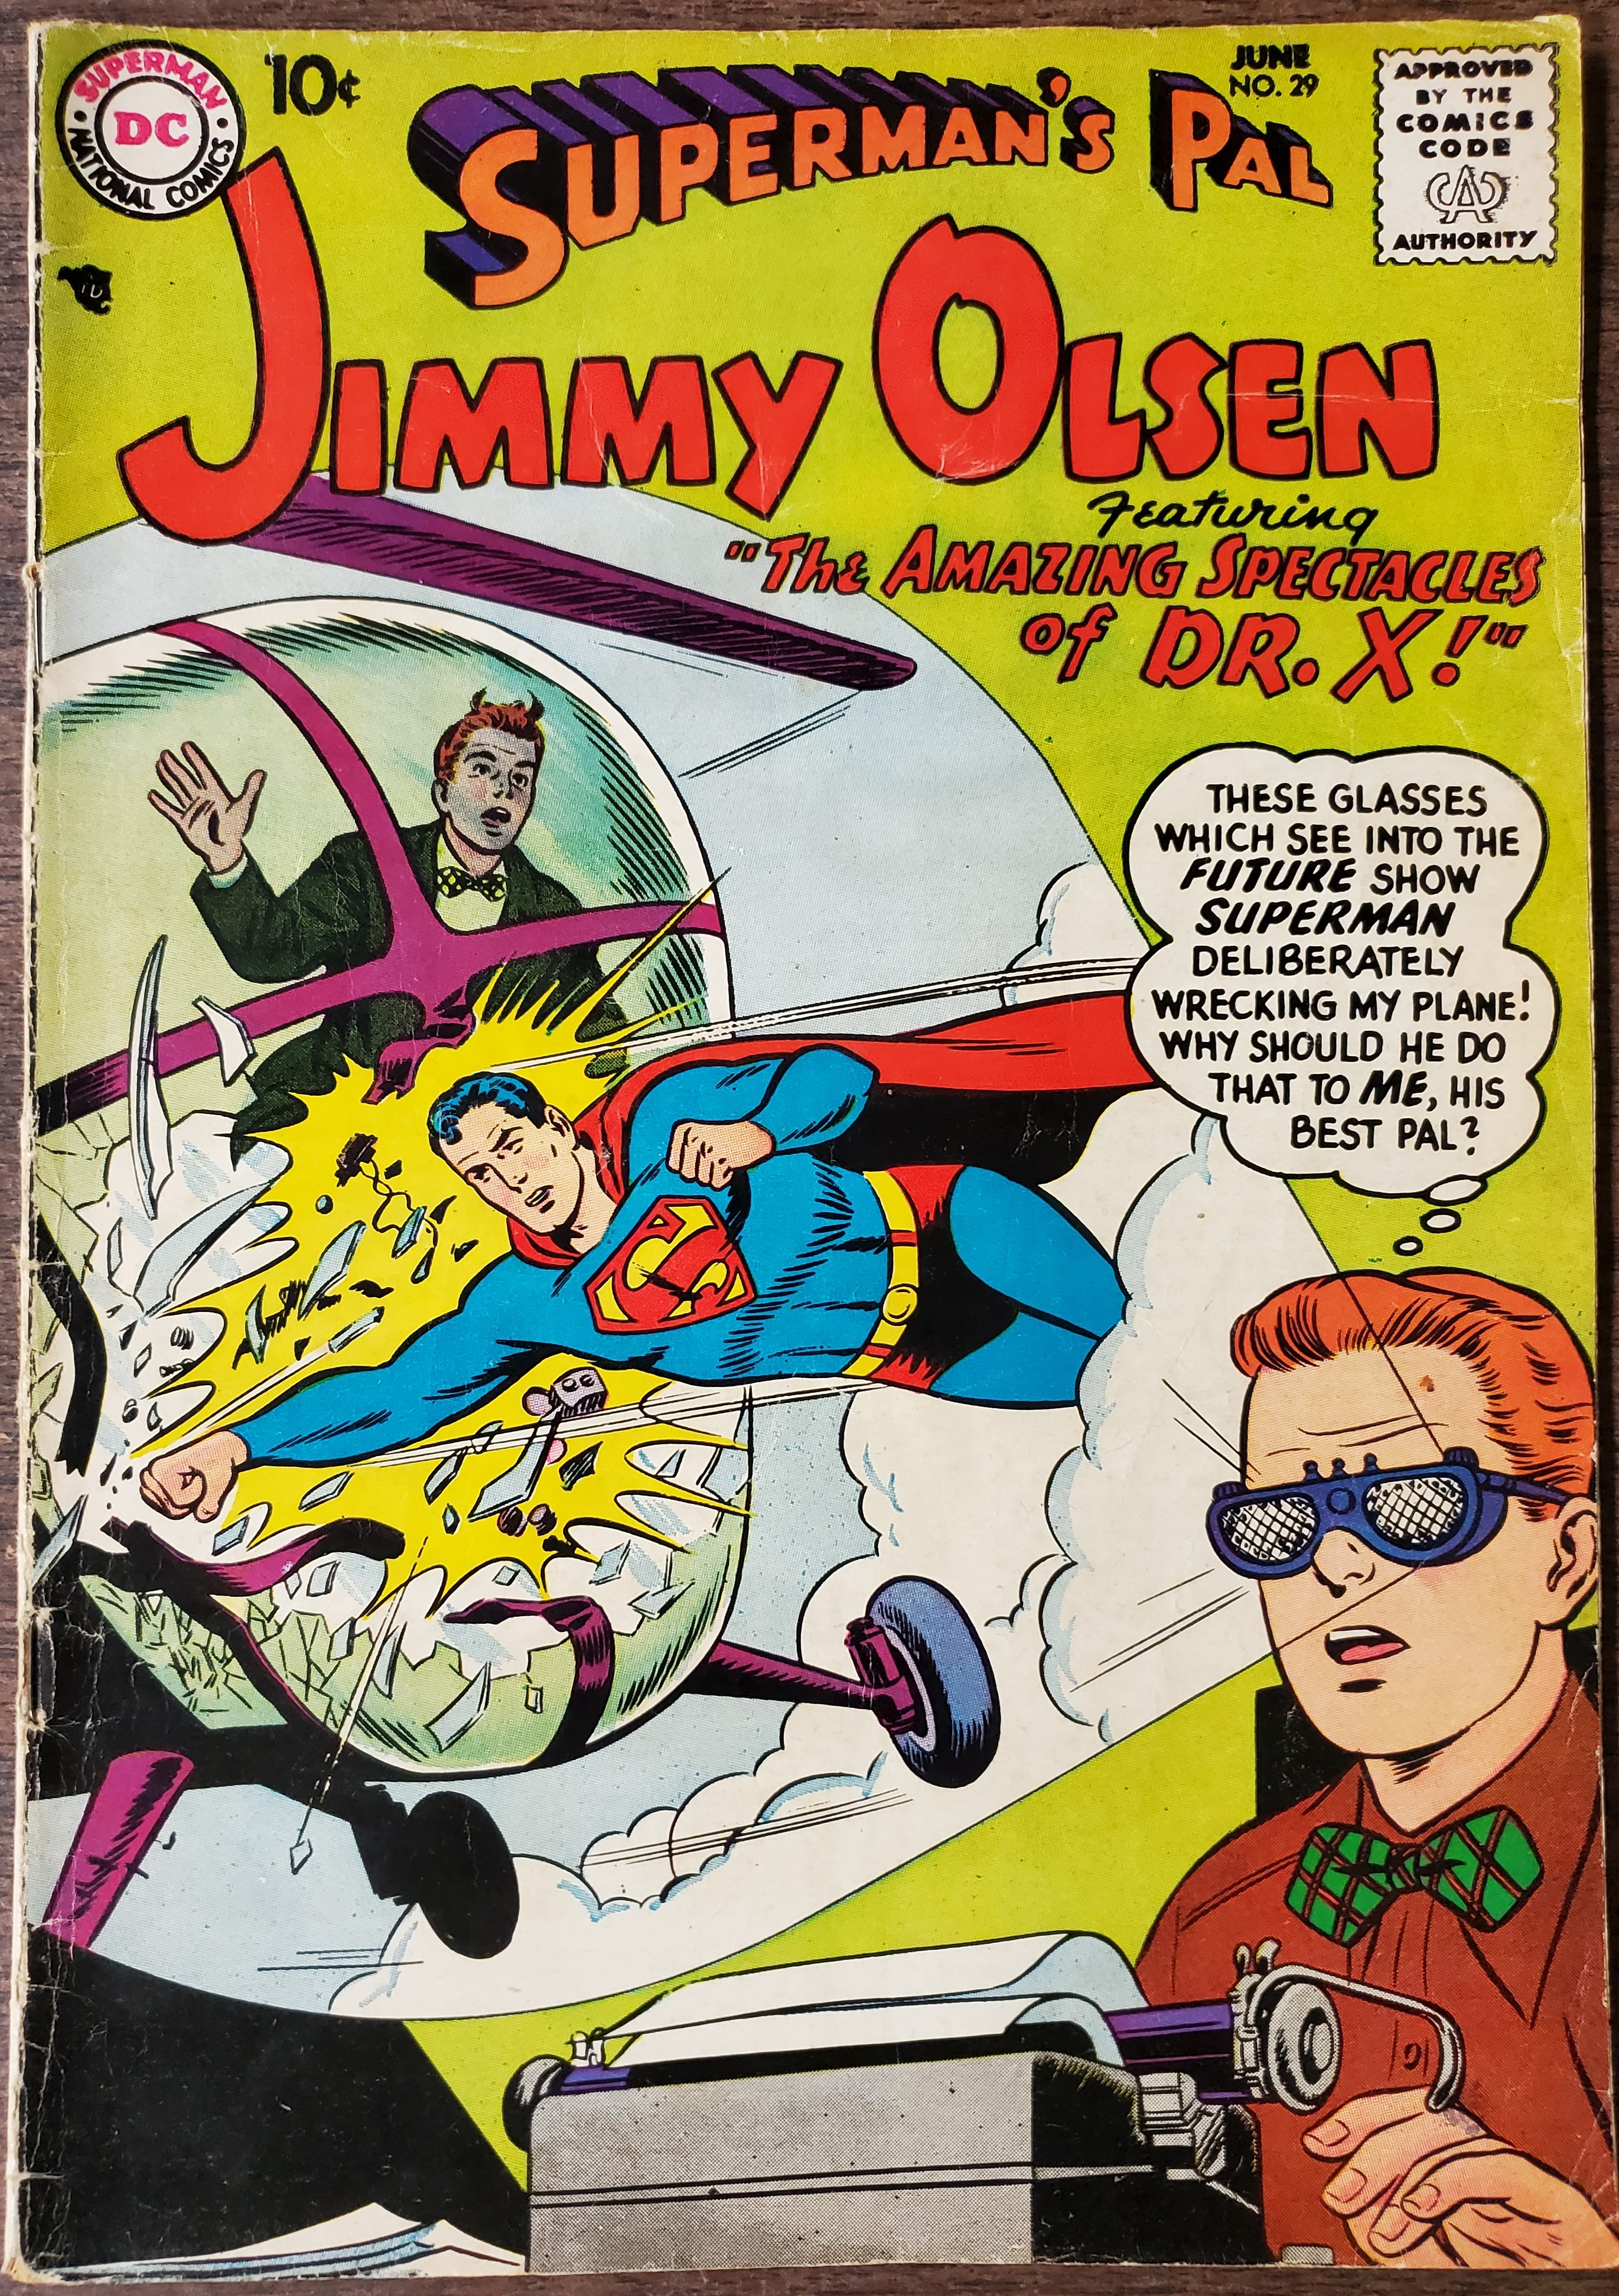 Superman's Pal, Jimmy Olsen #29(1954)-Very Good (3.5 – 5)